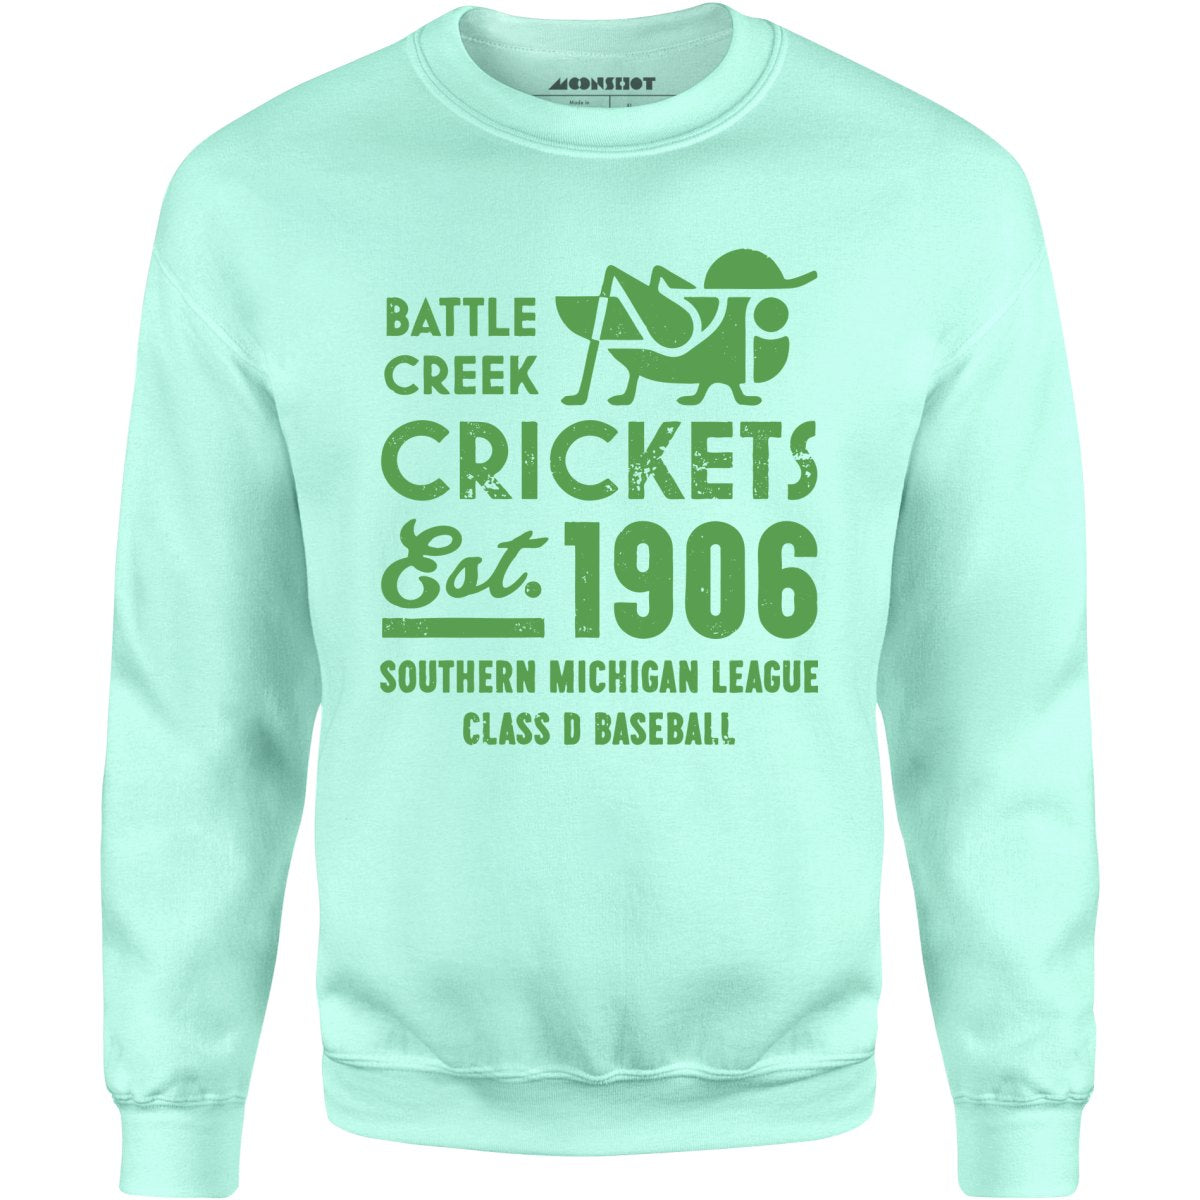 Battle Creek Crickets - Michigan - Vintage Defunct Baseball Teams - Unisex Sweatshirt